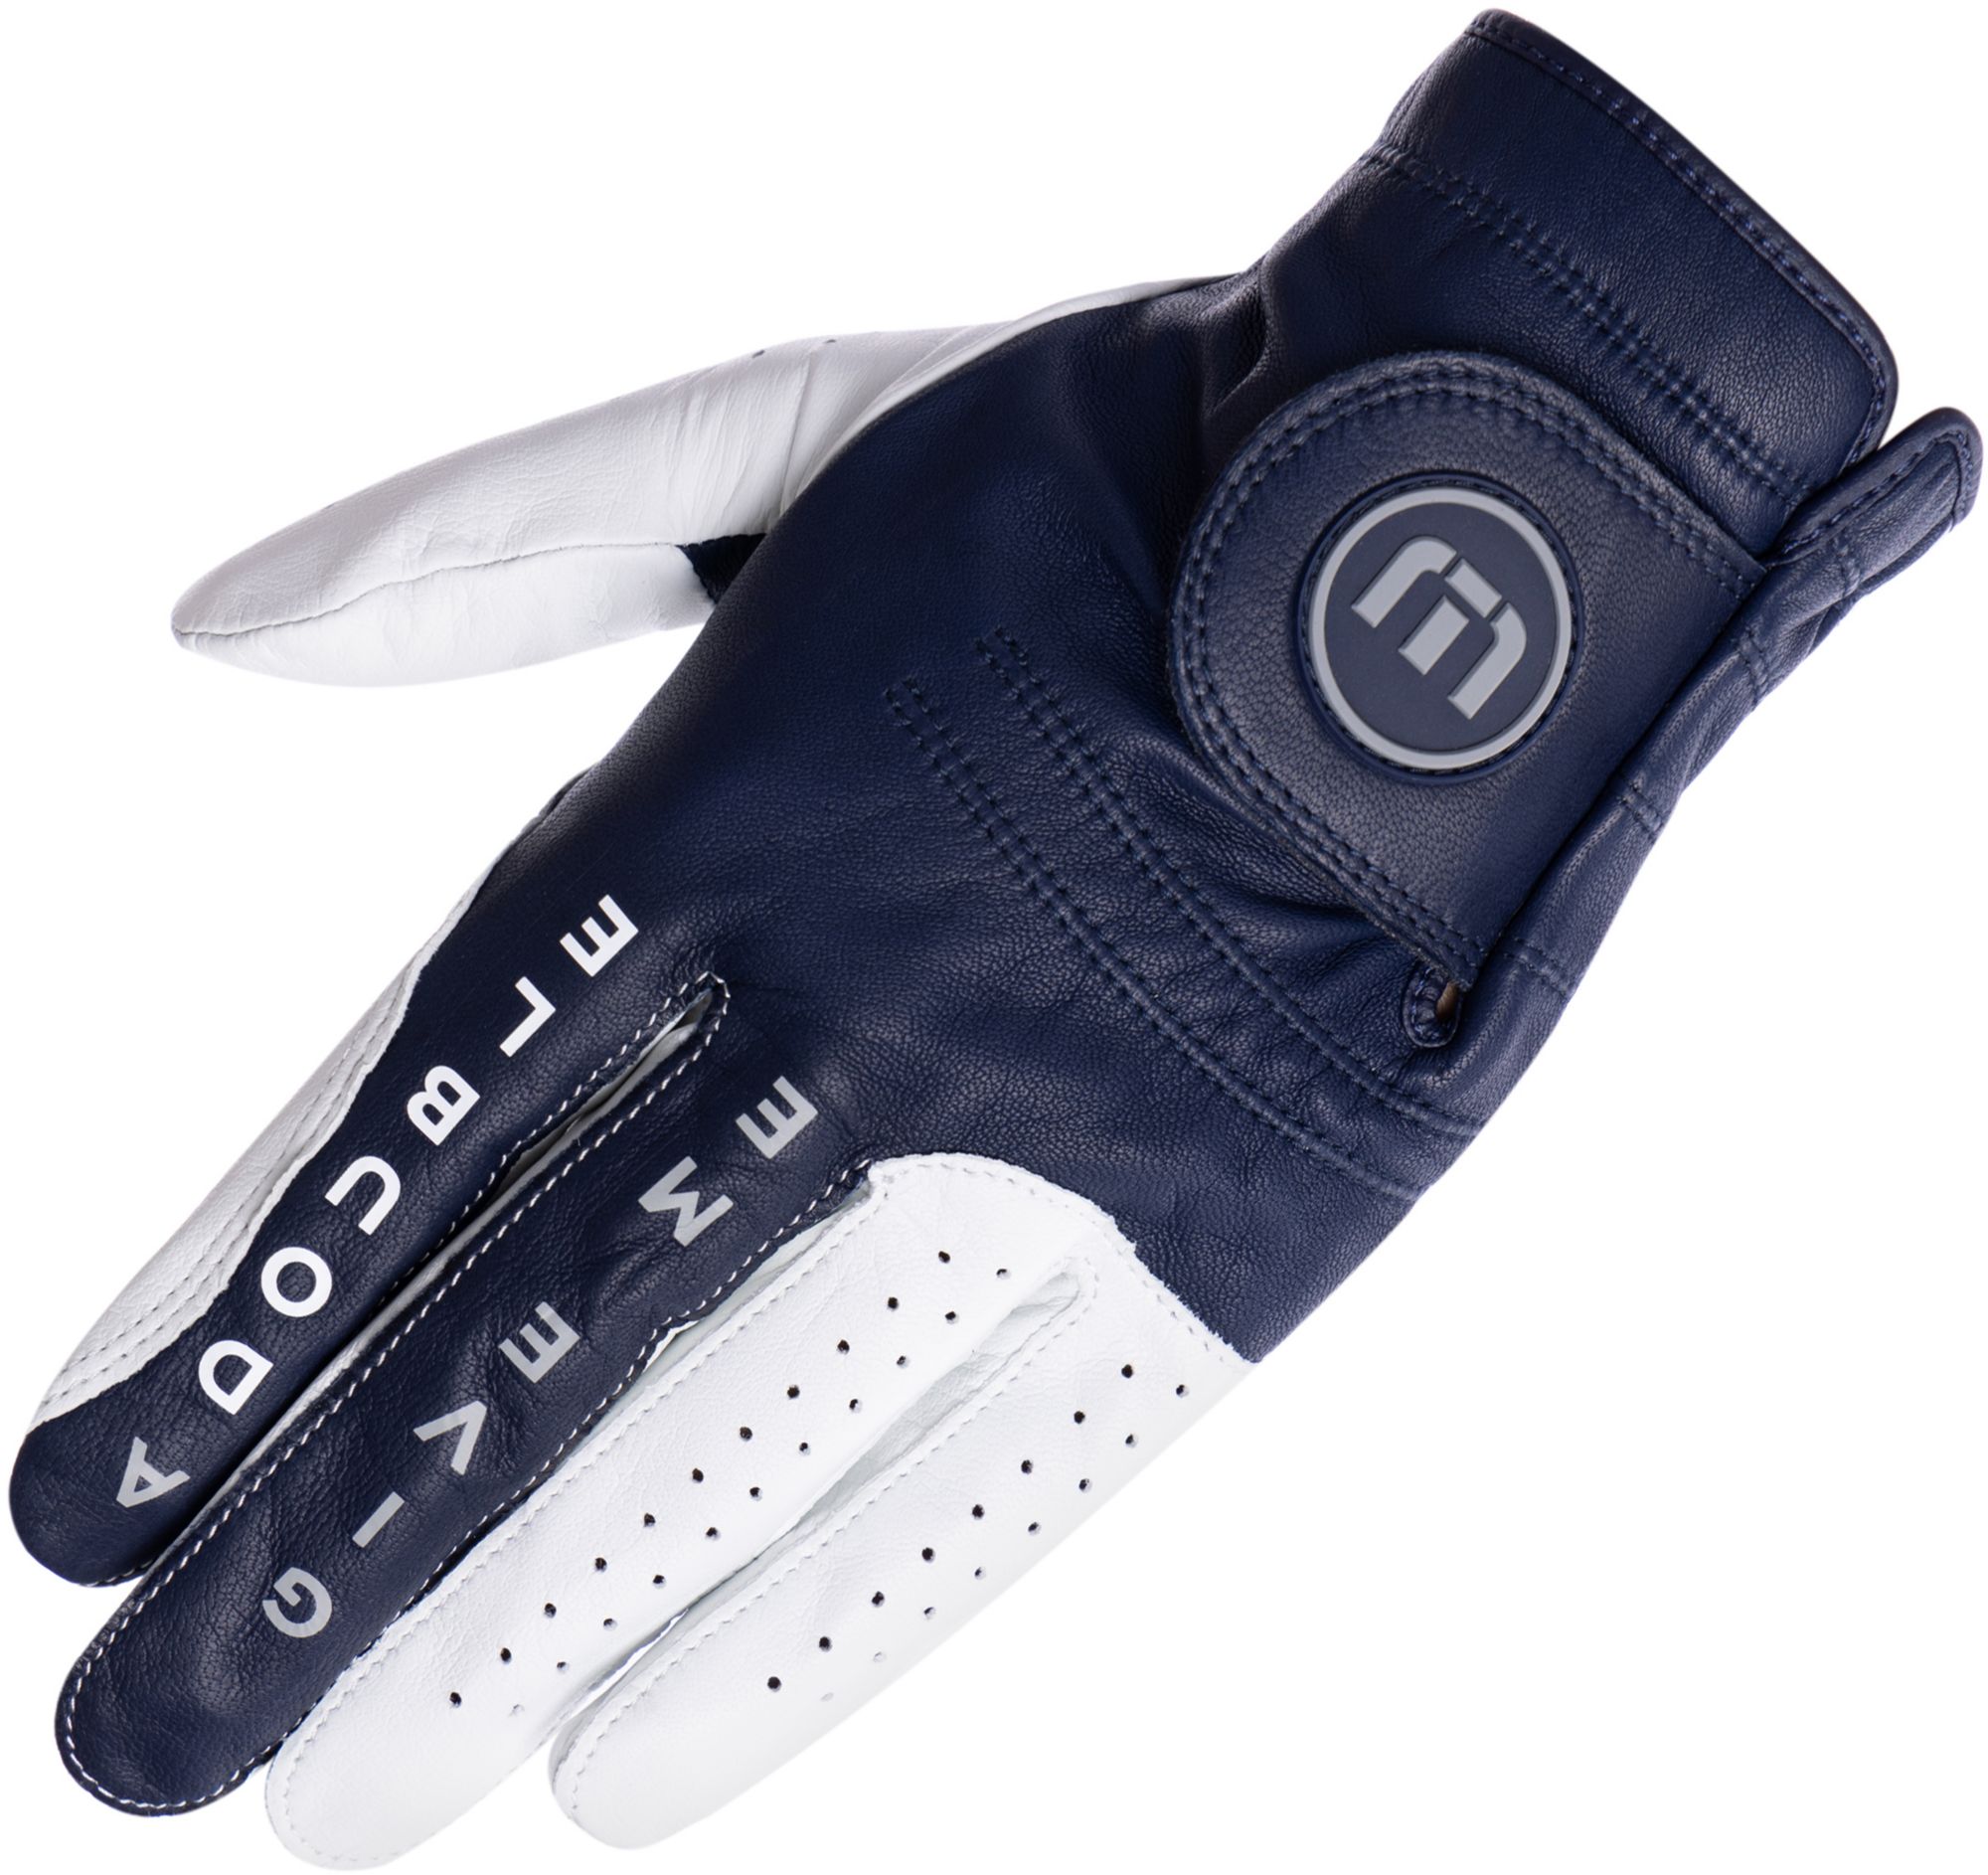 TravisMathew Double Me 2.0 Golf Glove